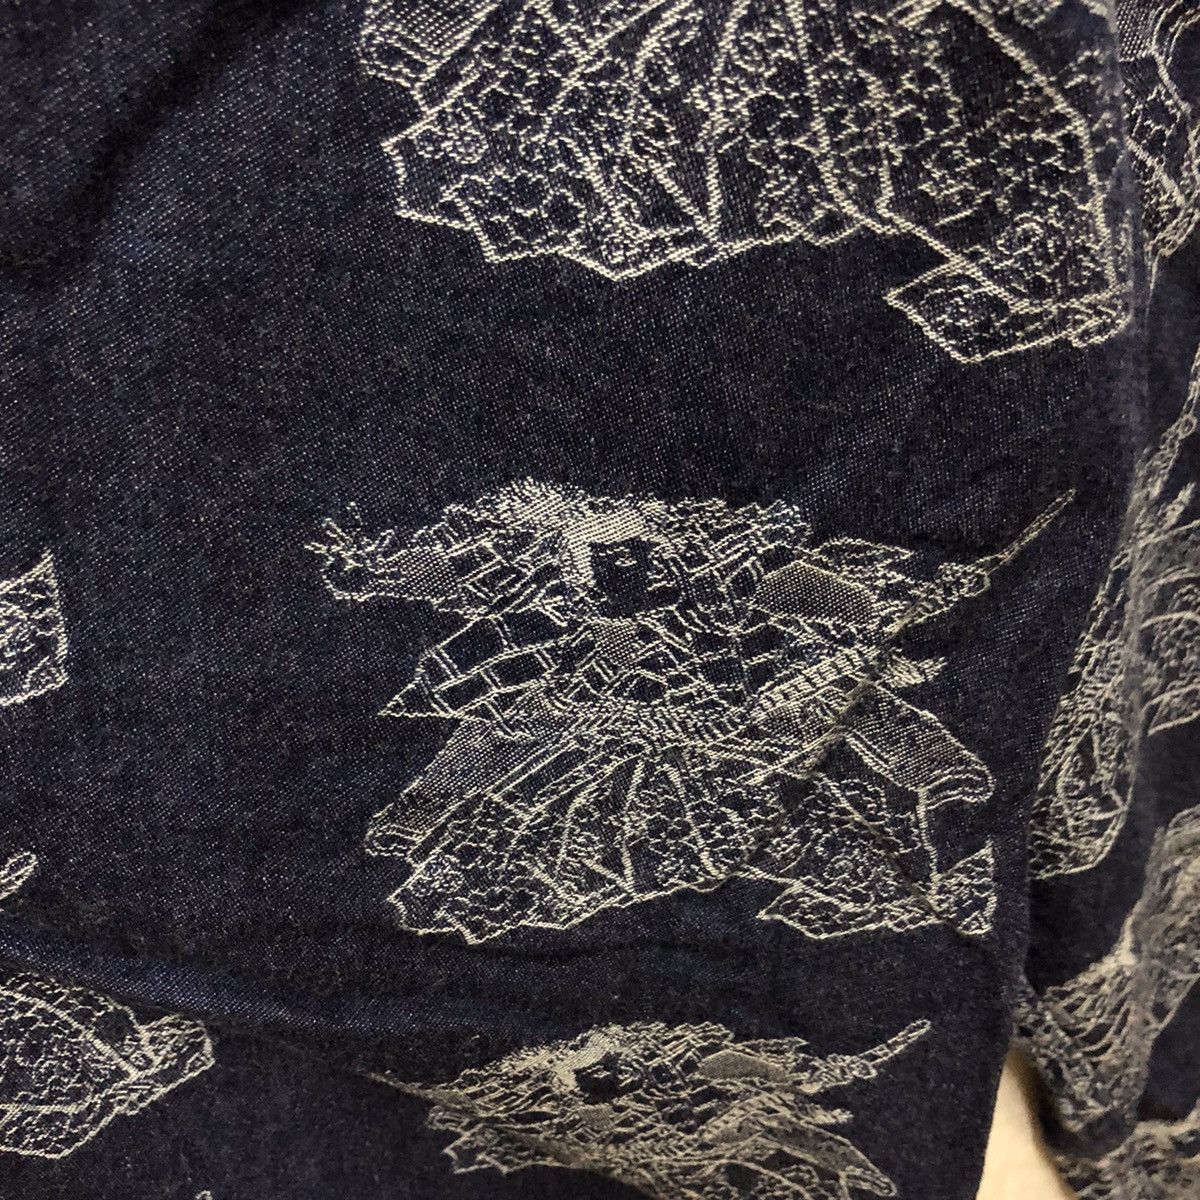 Very Rare - Eternal ronin japan samurai fullprinted denim shirt - 10